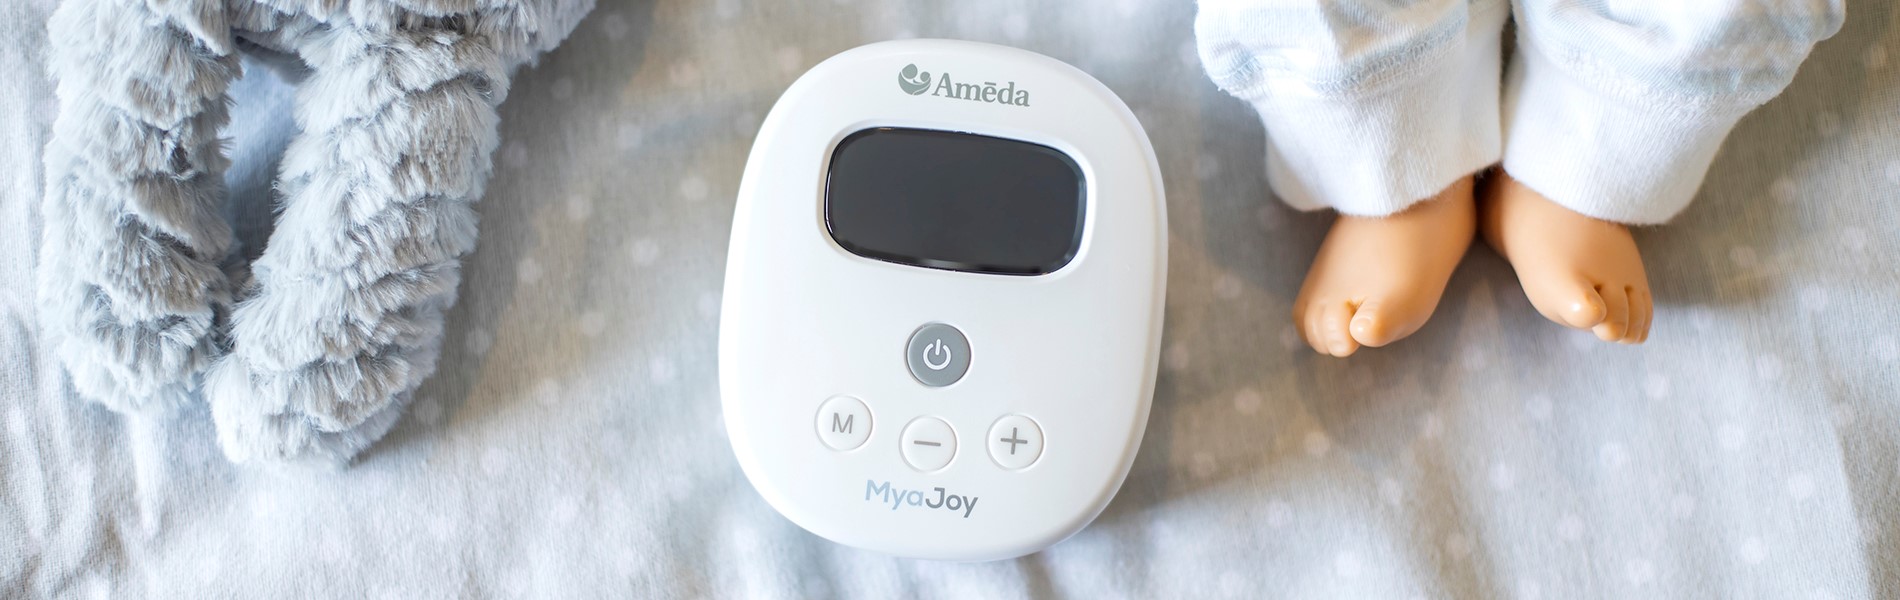 Ameda Mya Joy Double Electric Breast Pump Kit